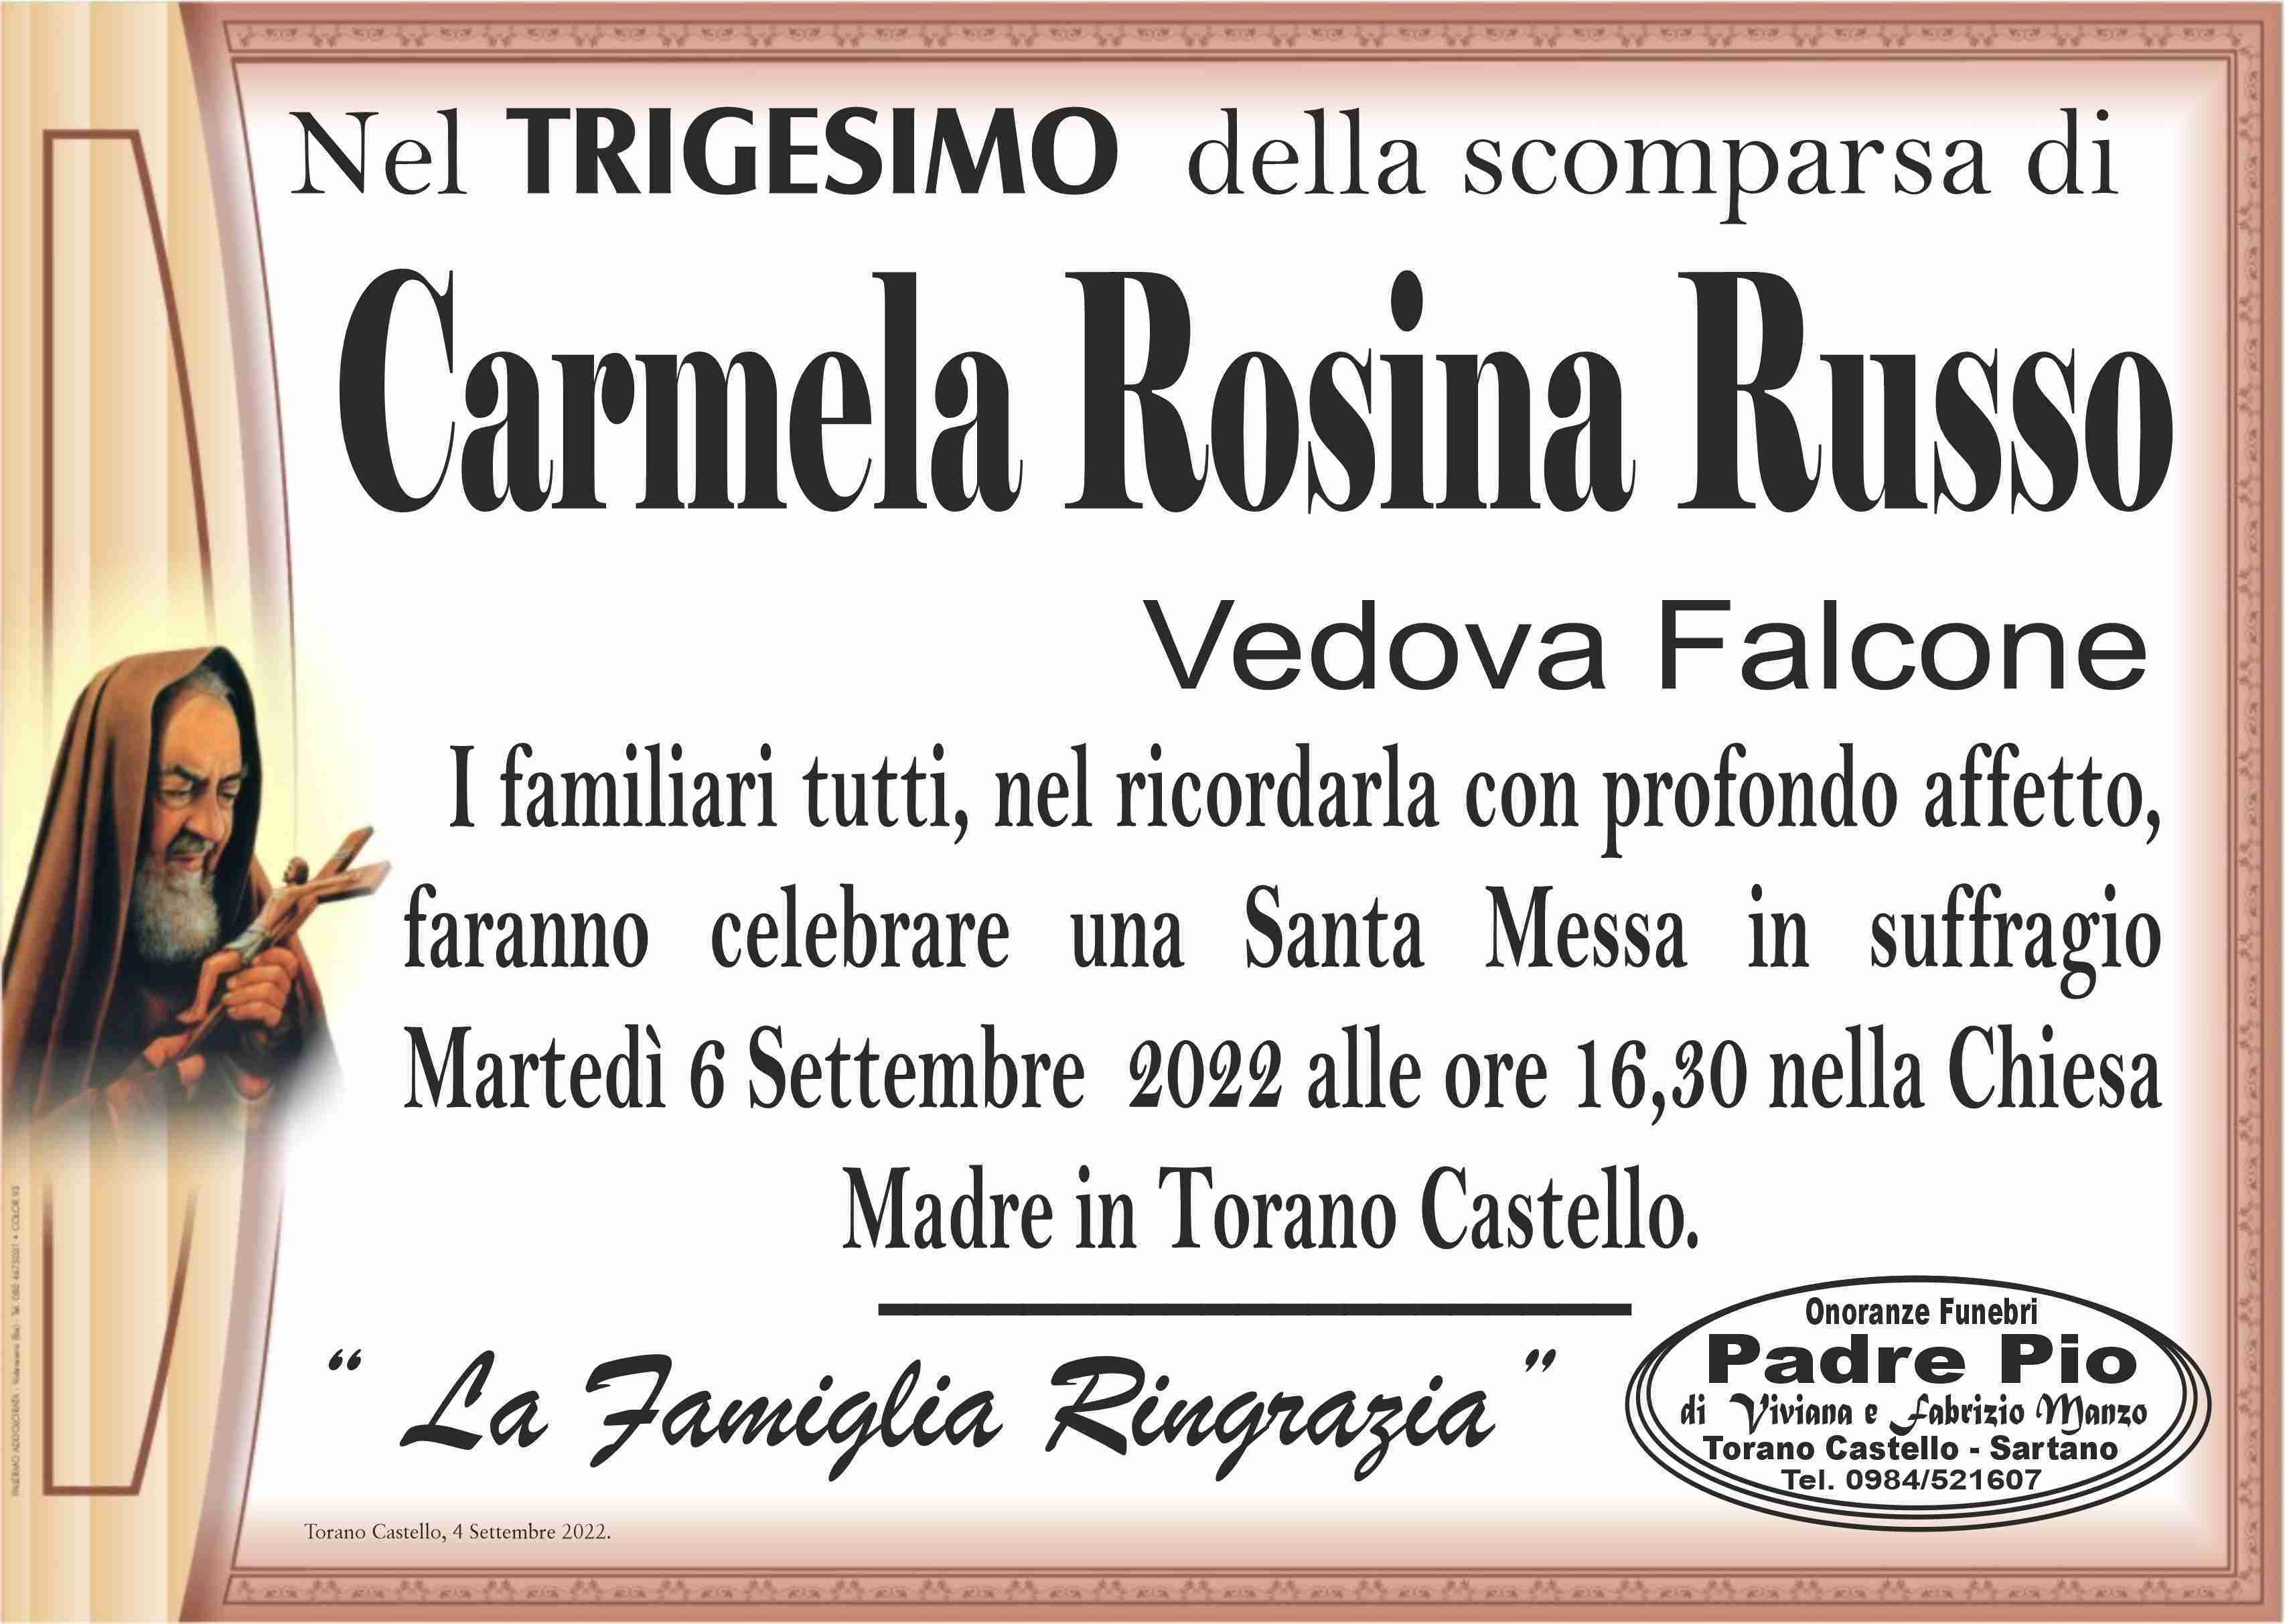 Carmela Rosina Russo